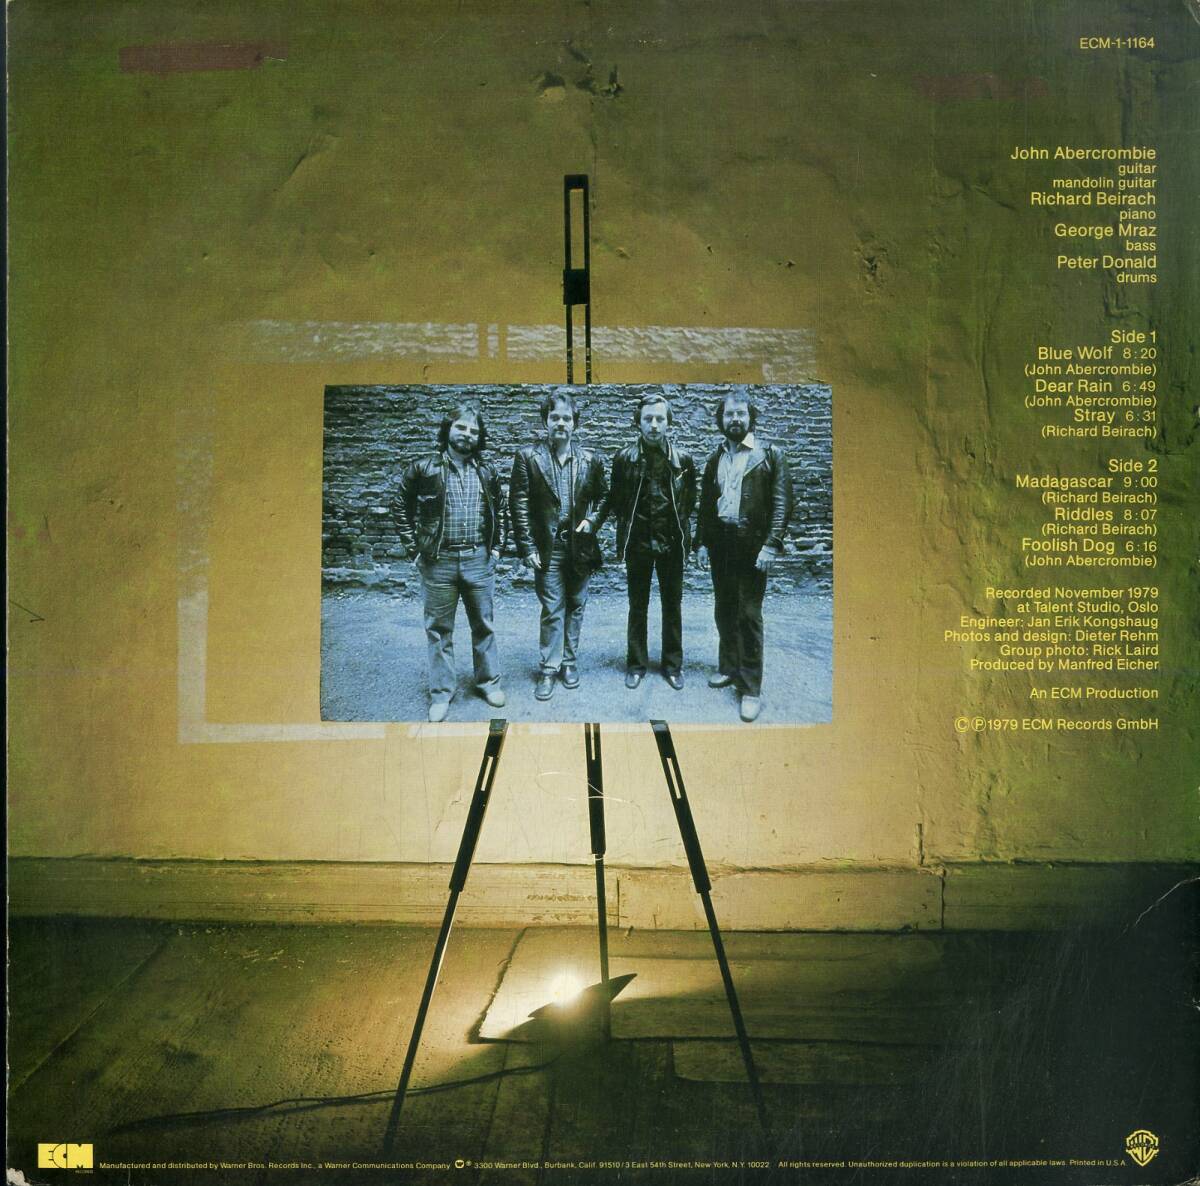 A00593828/LP/アバクロンビー・カルテット「Abercrombie Quartet (1980年・ECM-1-1164・コンテンポラリーJAZZ)」の画像2